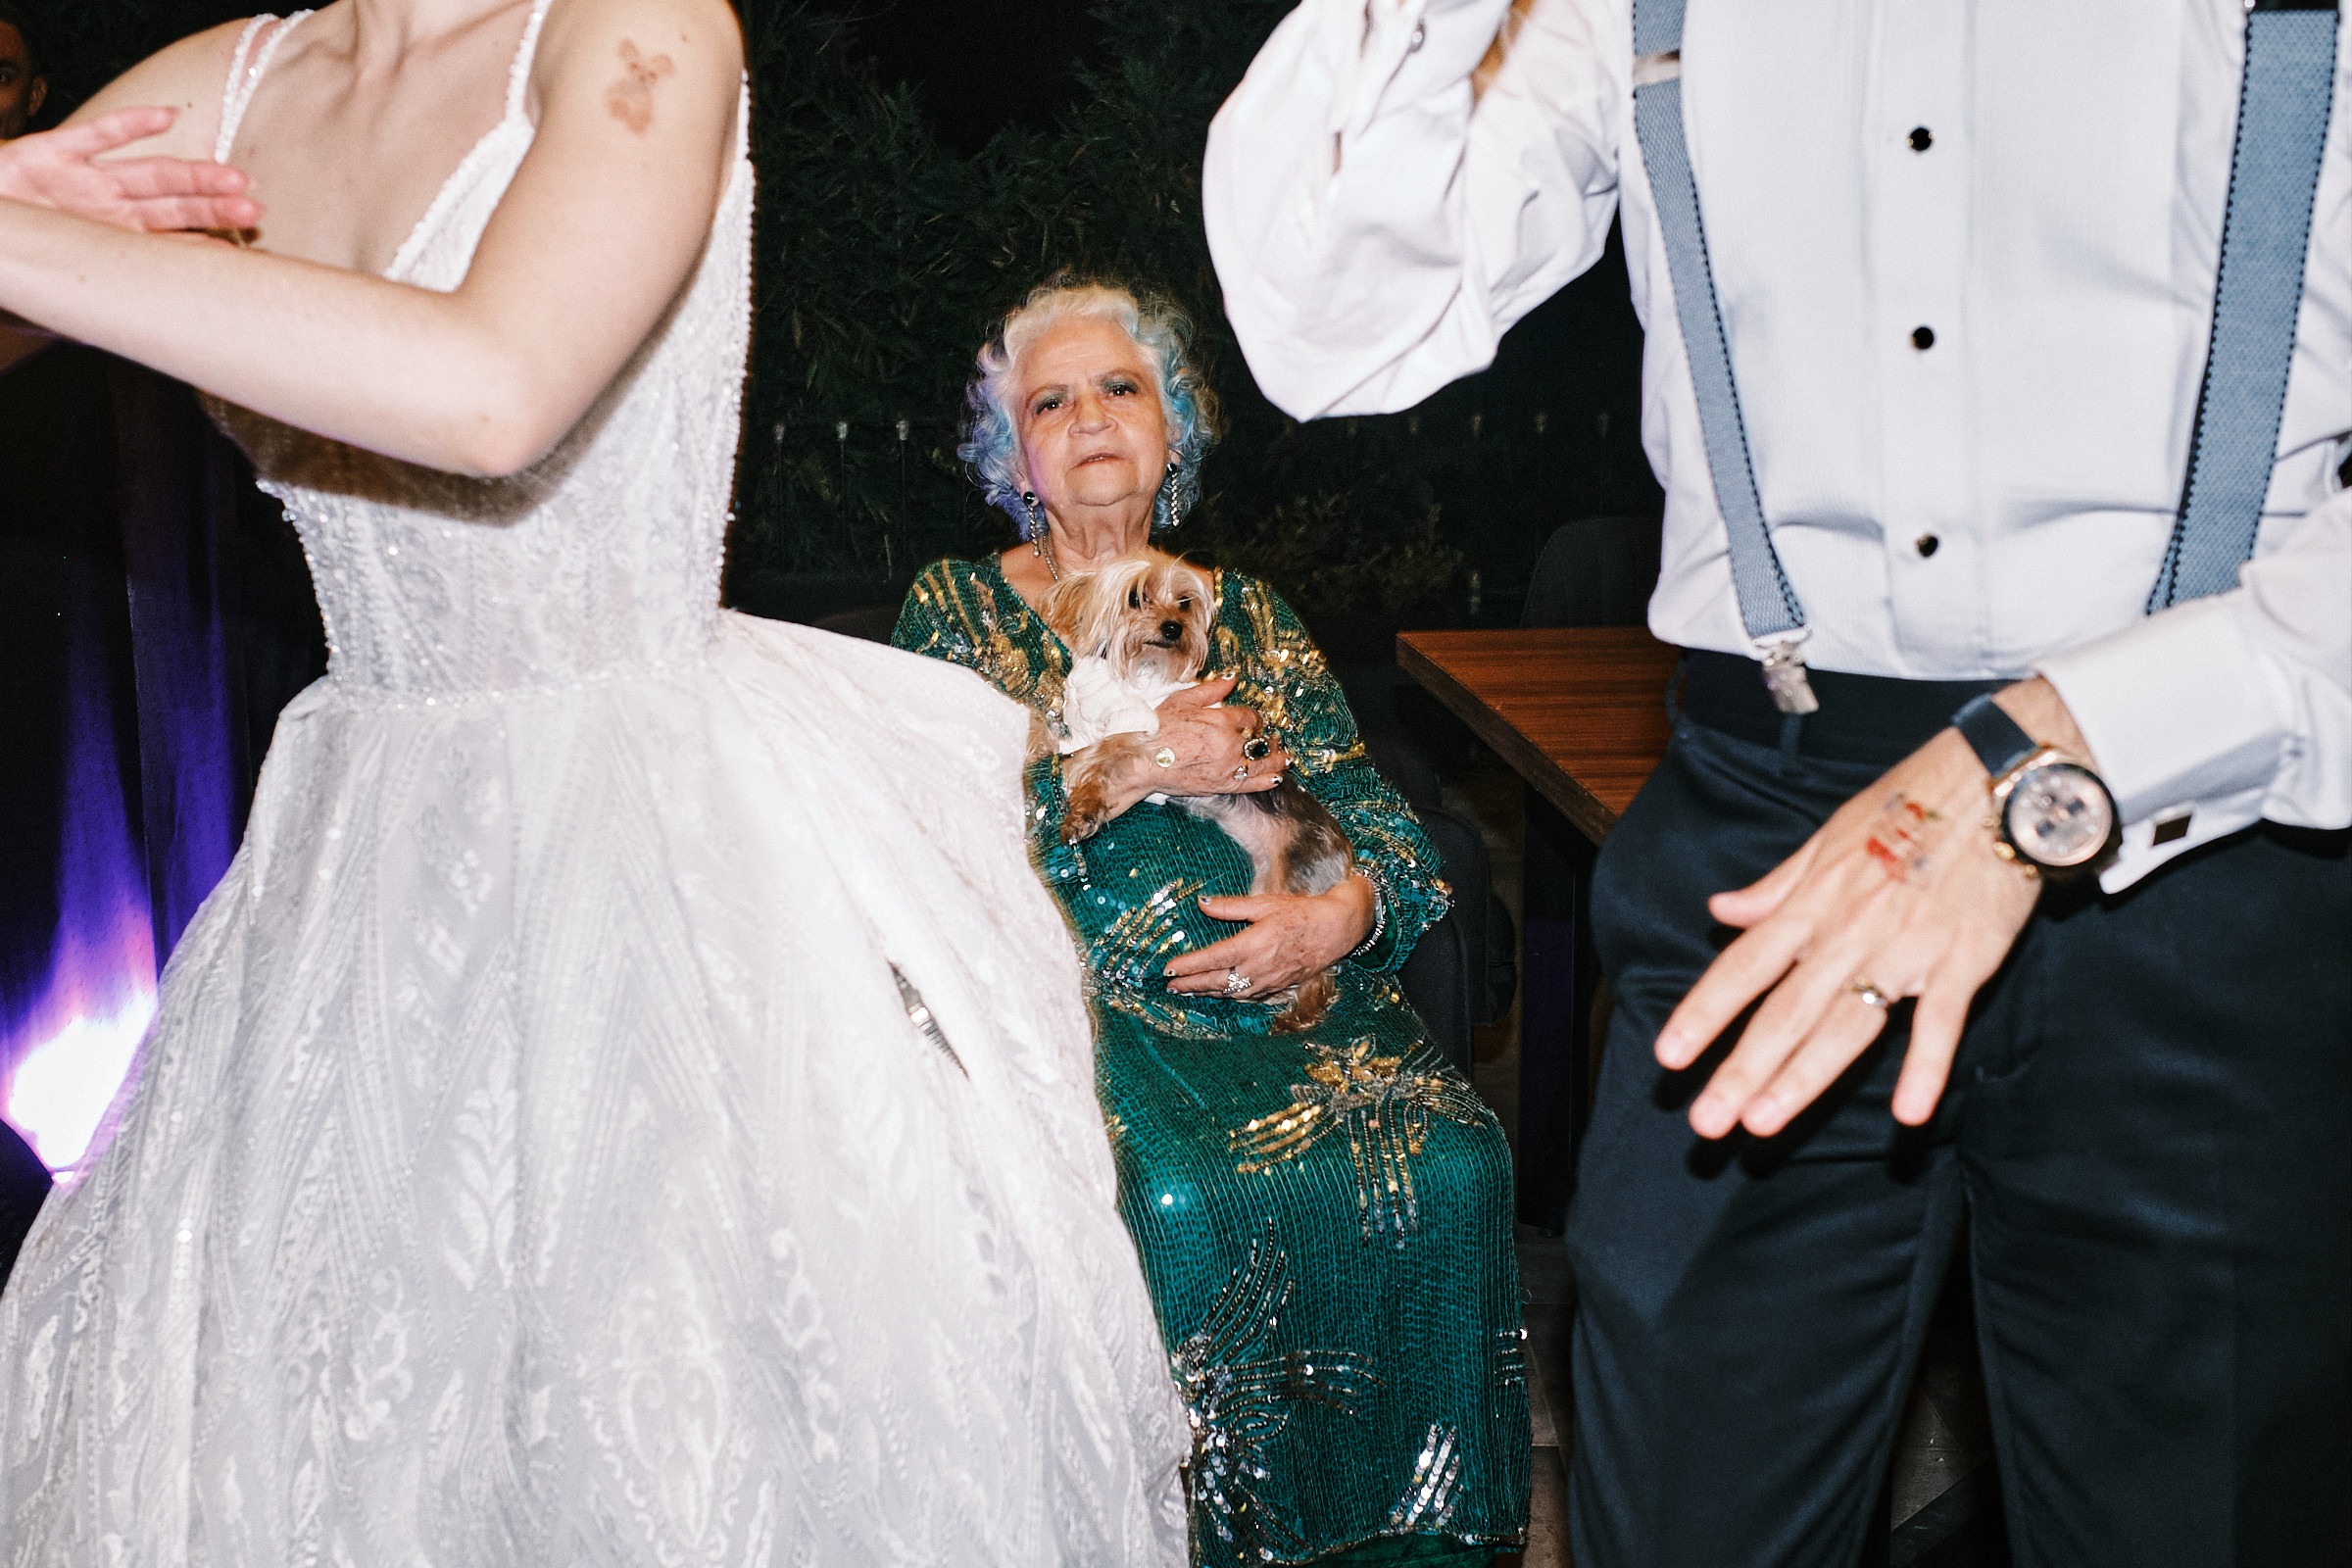 Grandma Of Groom Holds Dog While Bride And Groom Dance